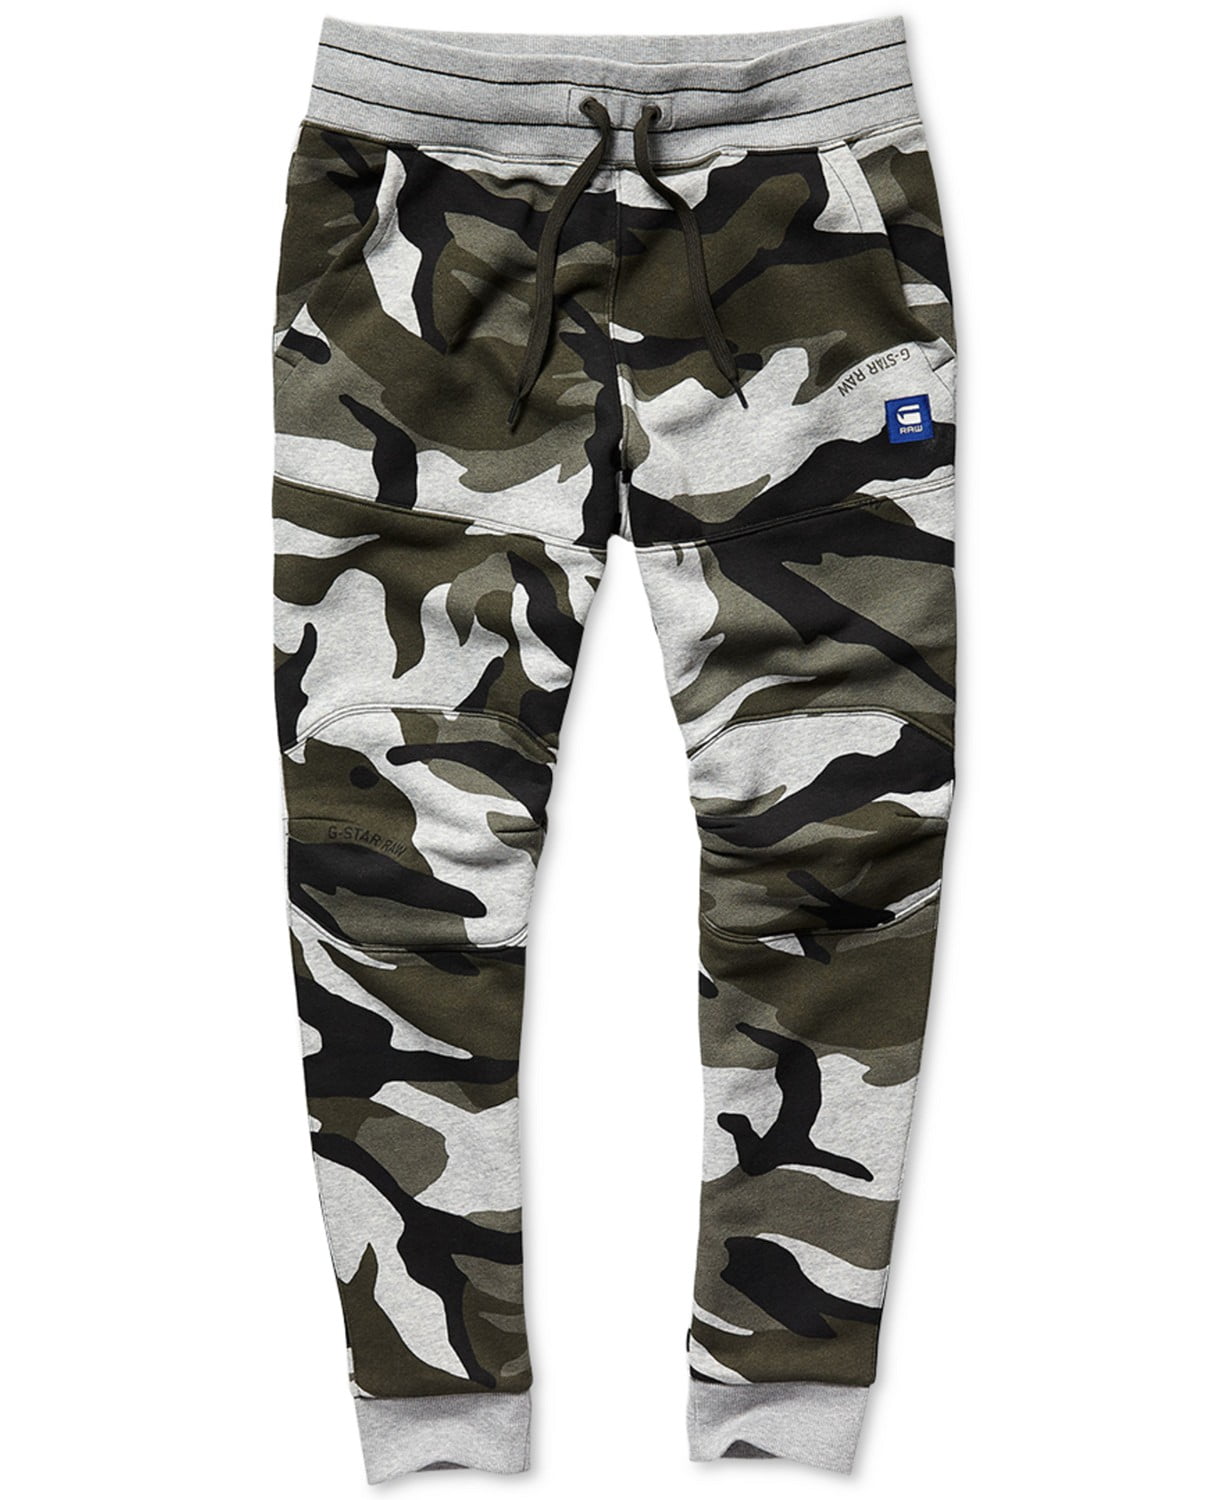 G-Star Raw Pants - Men's Pants Camo-Print Stretch Joggers 2XL - Walmart ...